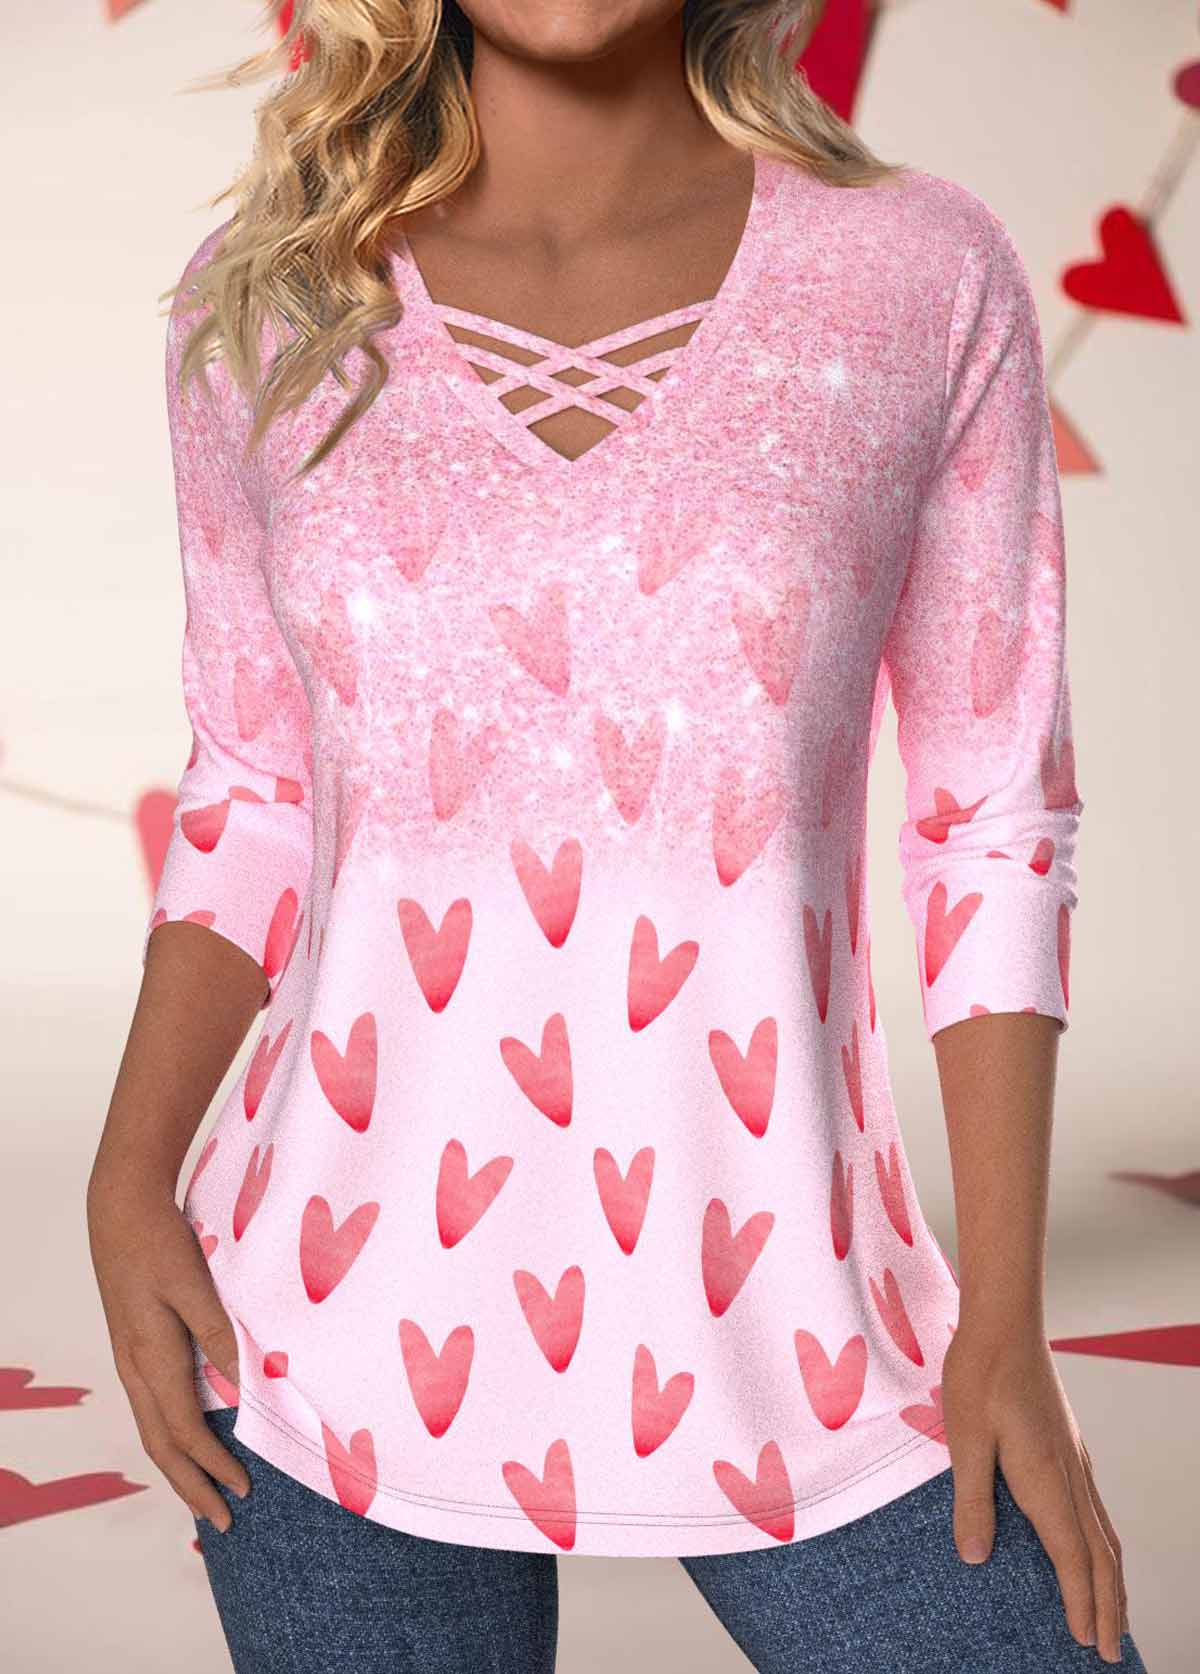 Criss Cross Valentine's Day Light Pink T Shirt